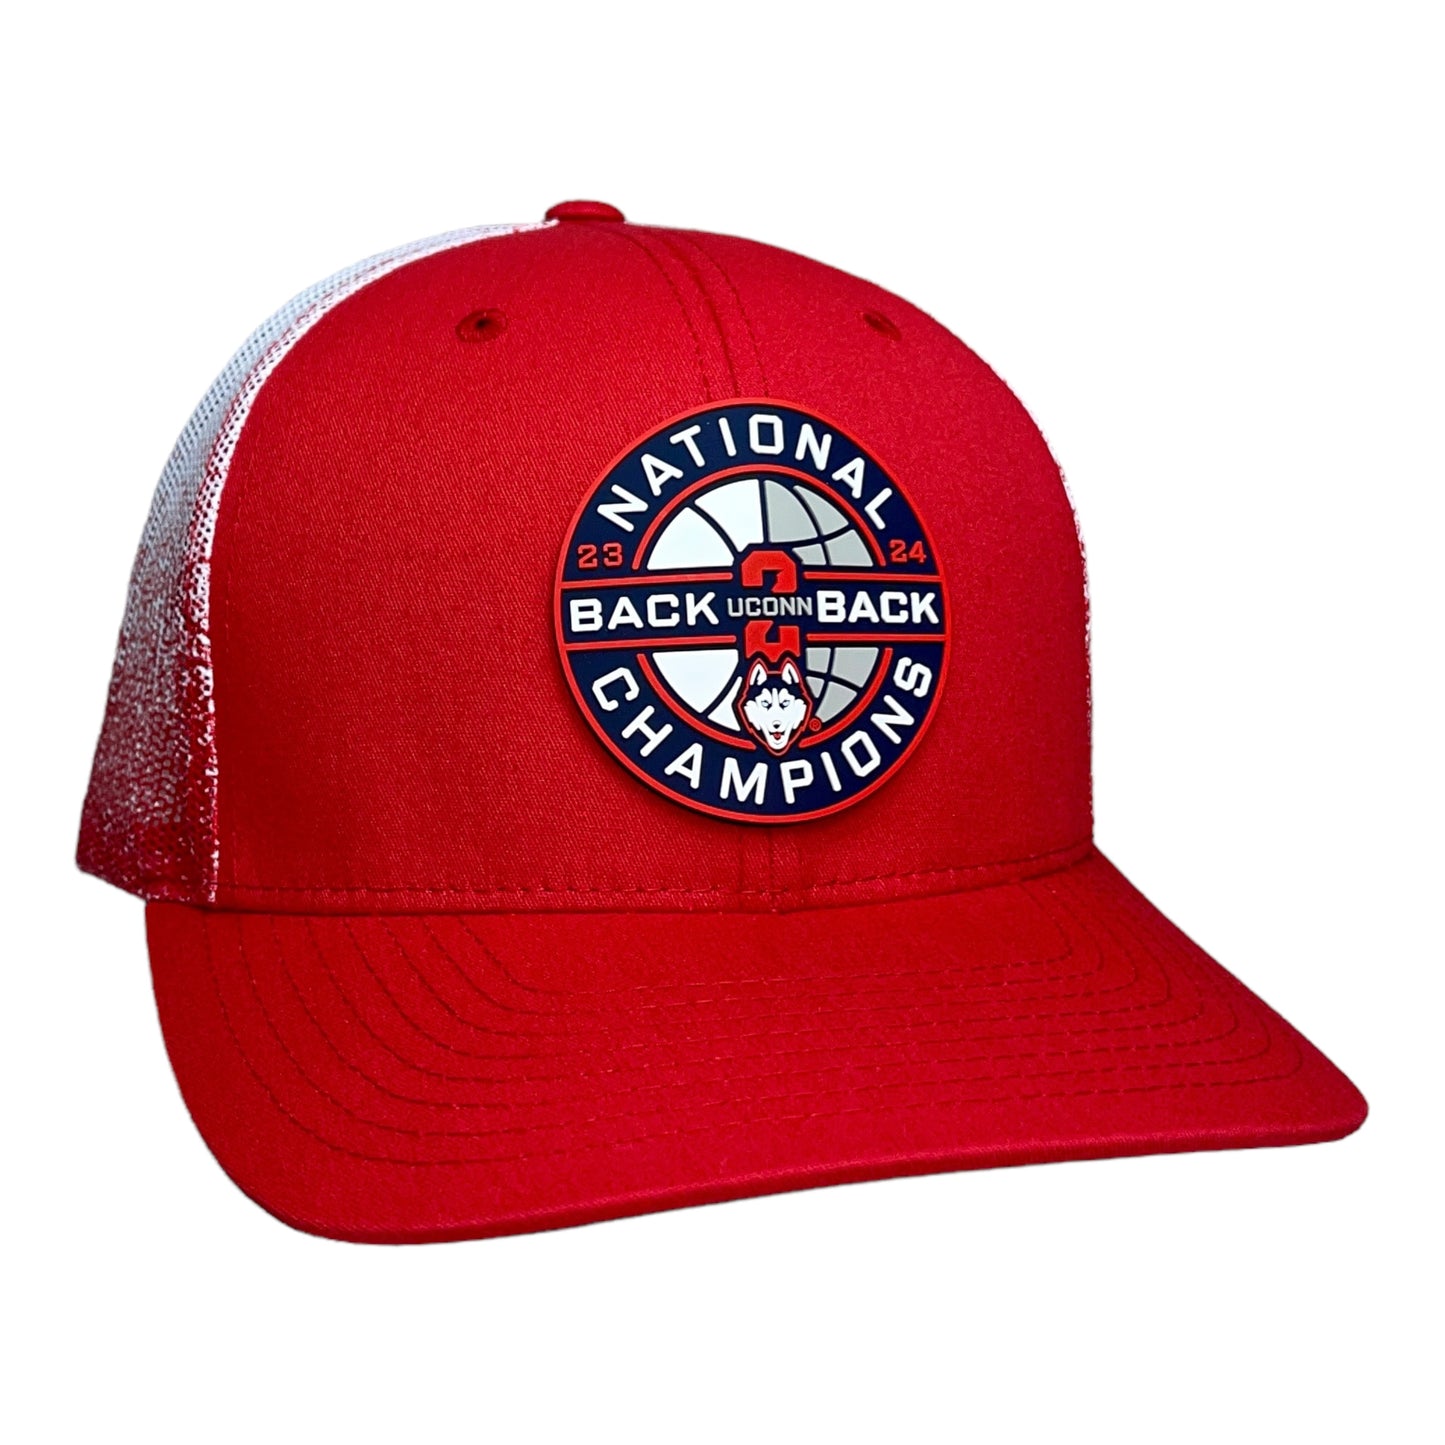 UConn Huskies Back-To-Back NCAA Men's Basketball National Champions 3D Snapback Trucker Hat- Red Fade